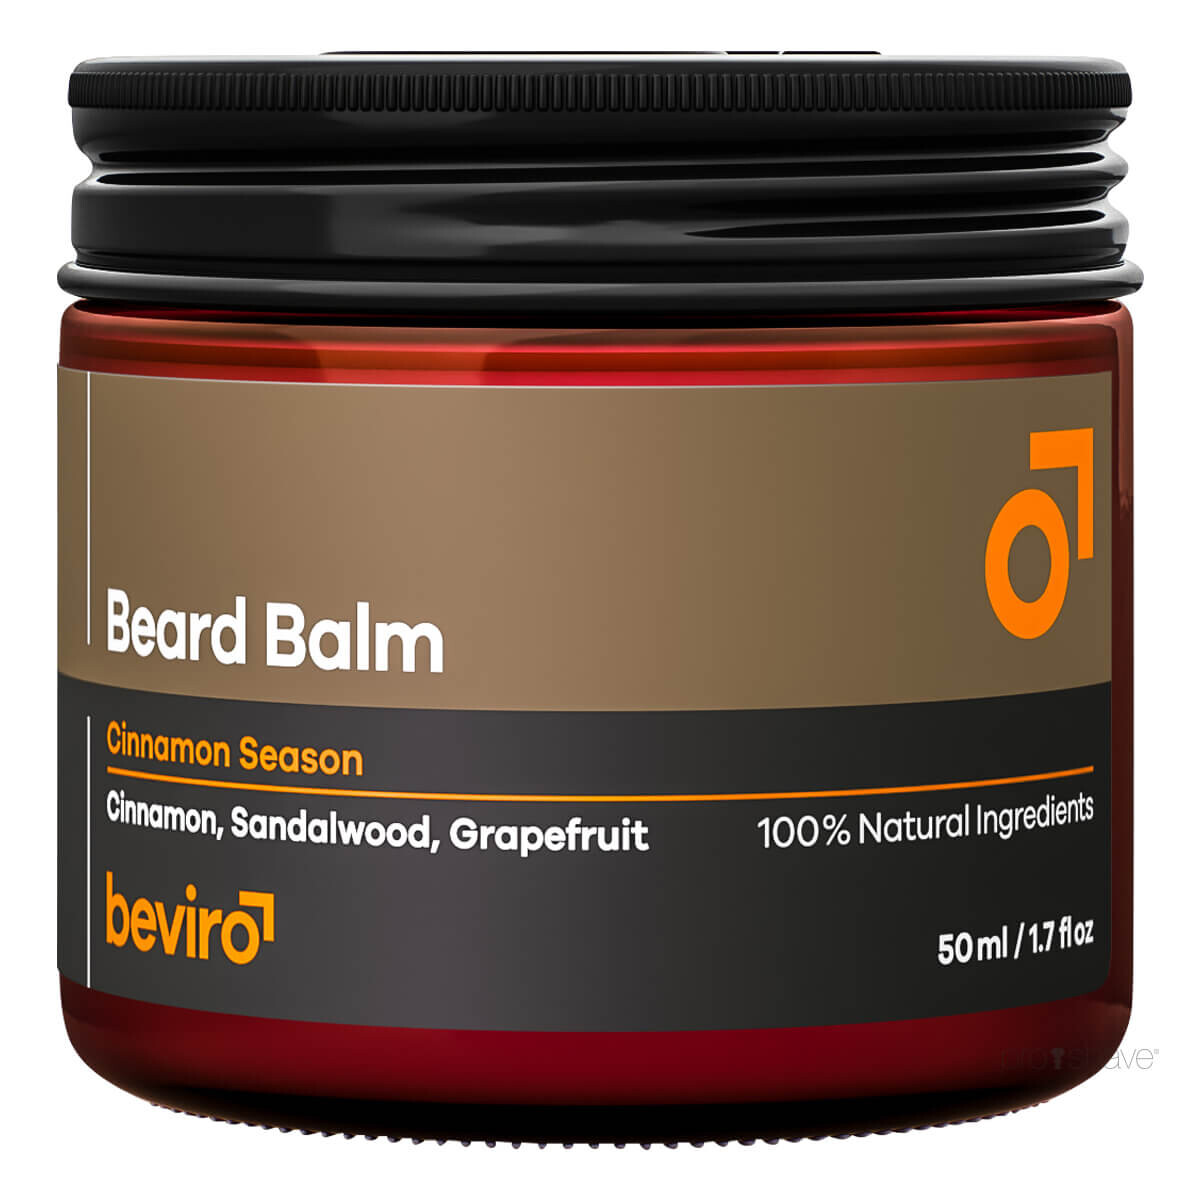 Billede af Beviro Beard Balm, Cinnamon Season, 50 ml.